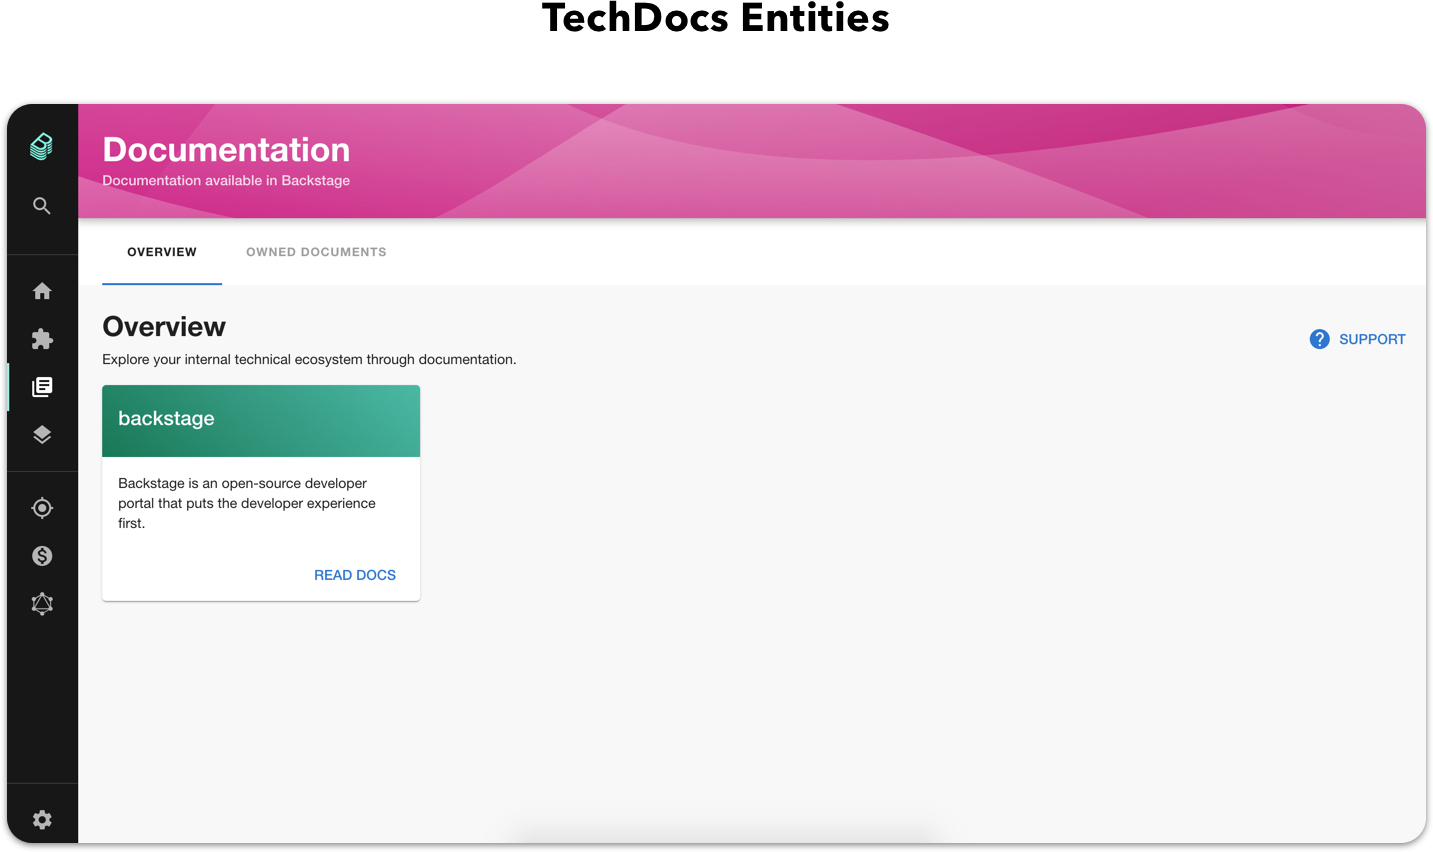 TechDocs entities